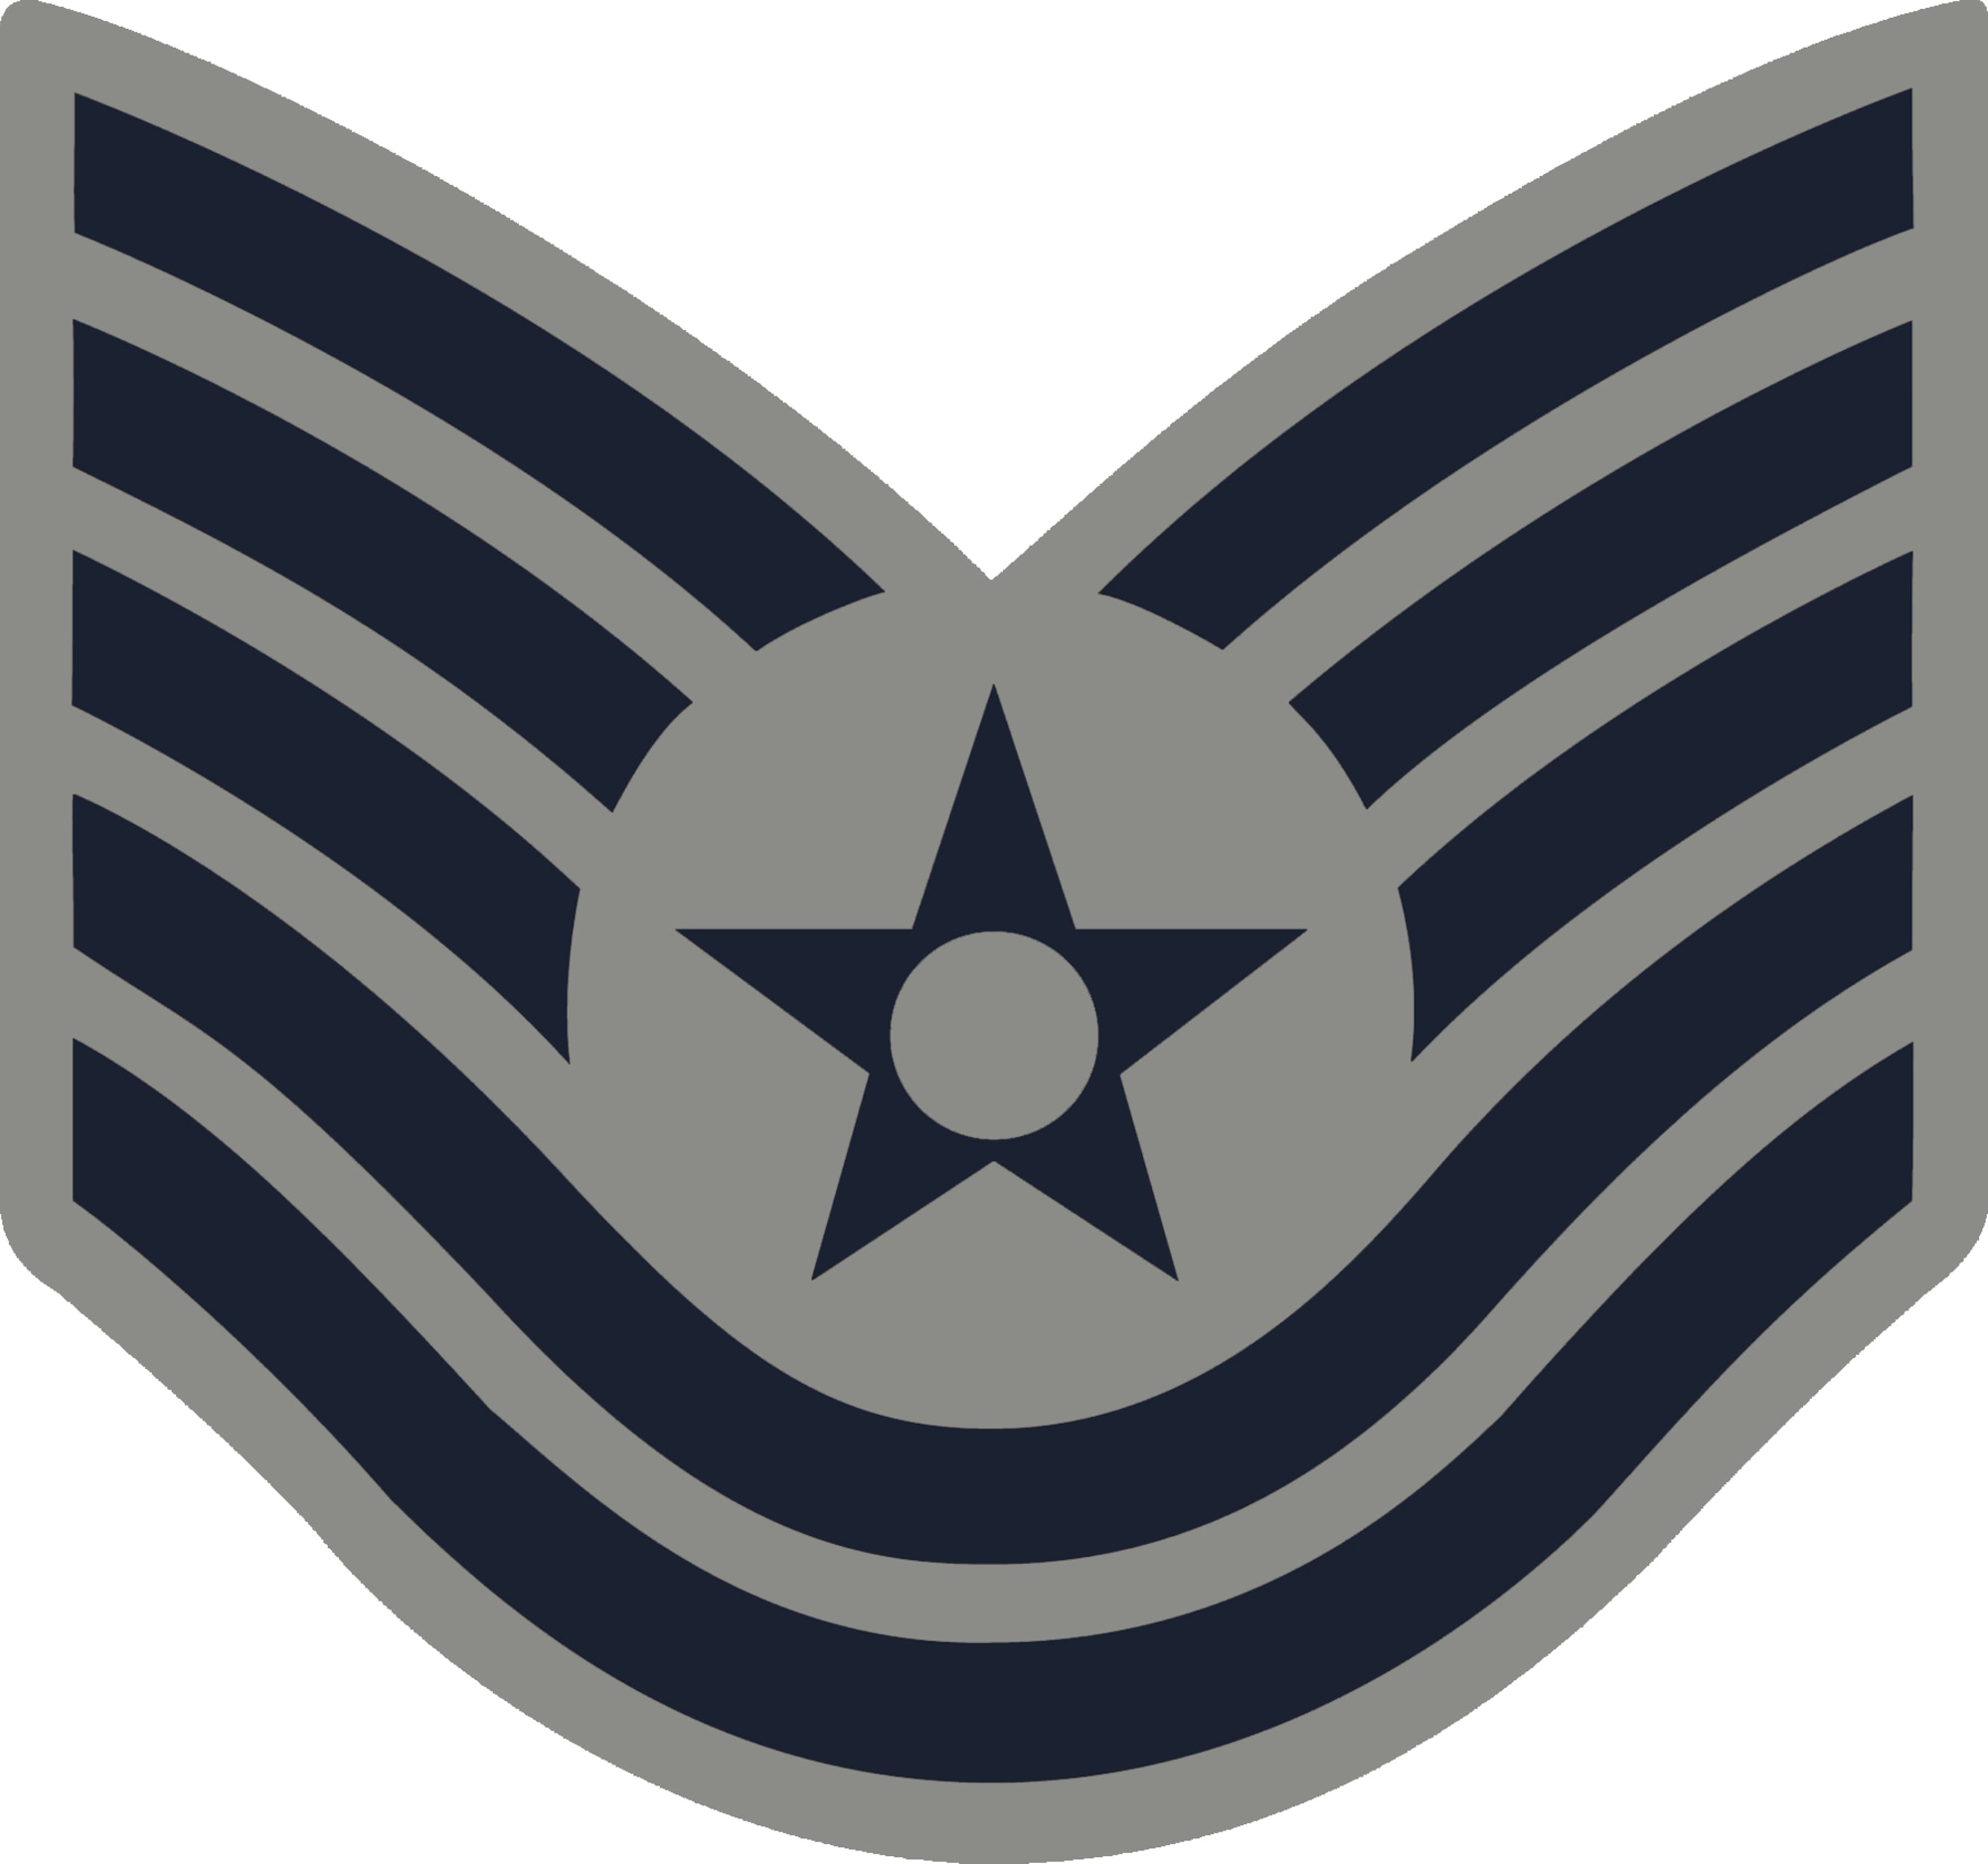 Tech. Sgt., E-6, (ABU color), U.S. Air Force graphic